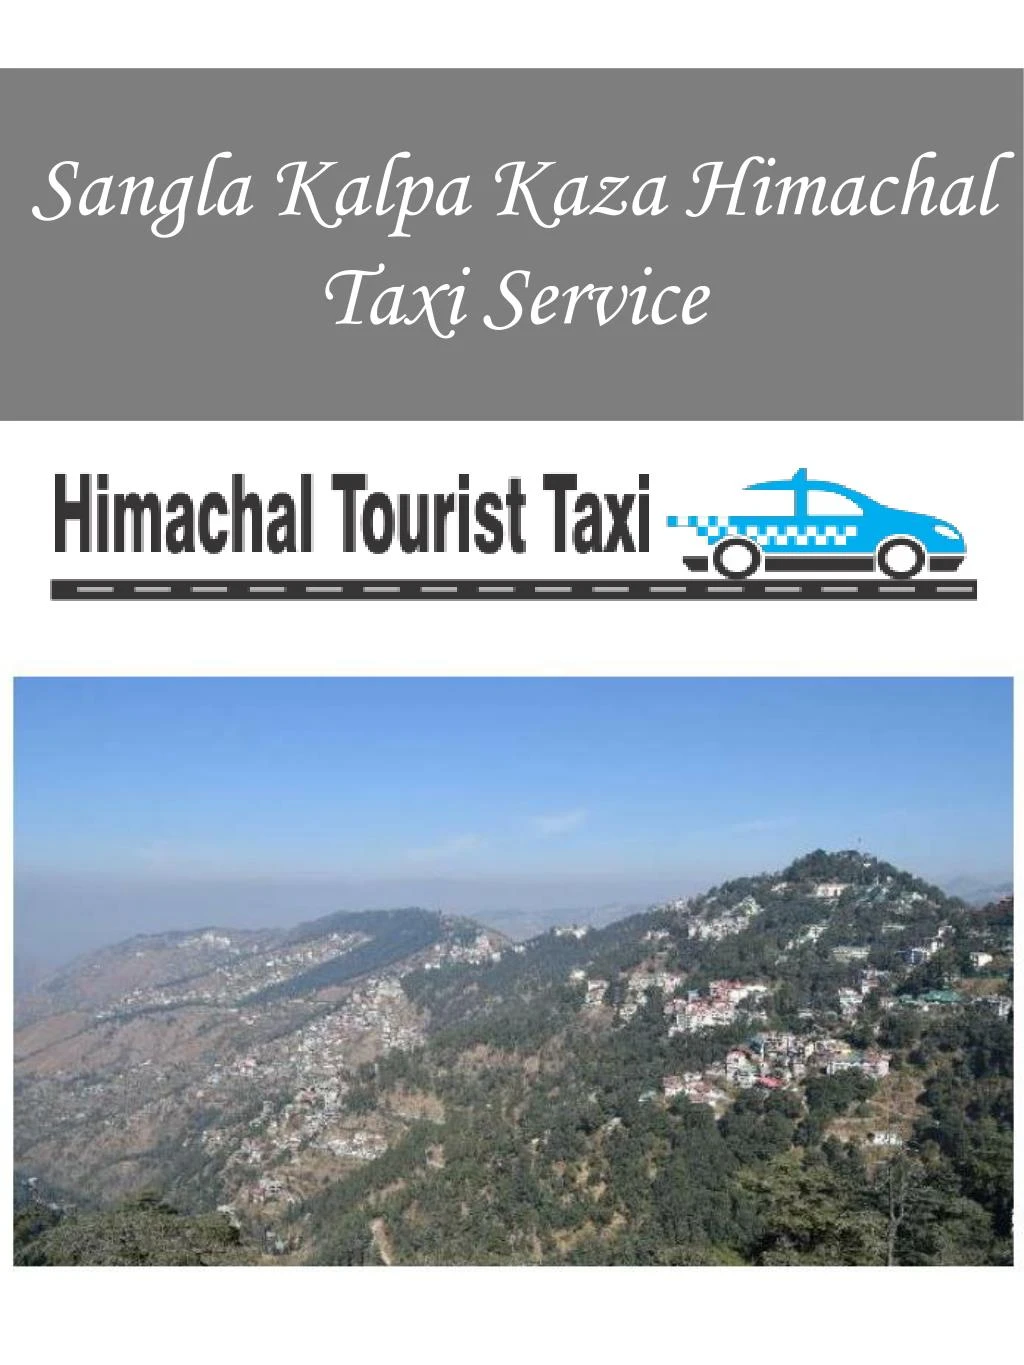 sangla kalpa kaza himachal taxi service